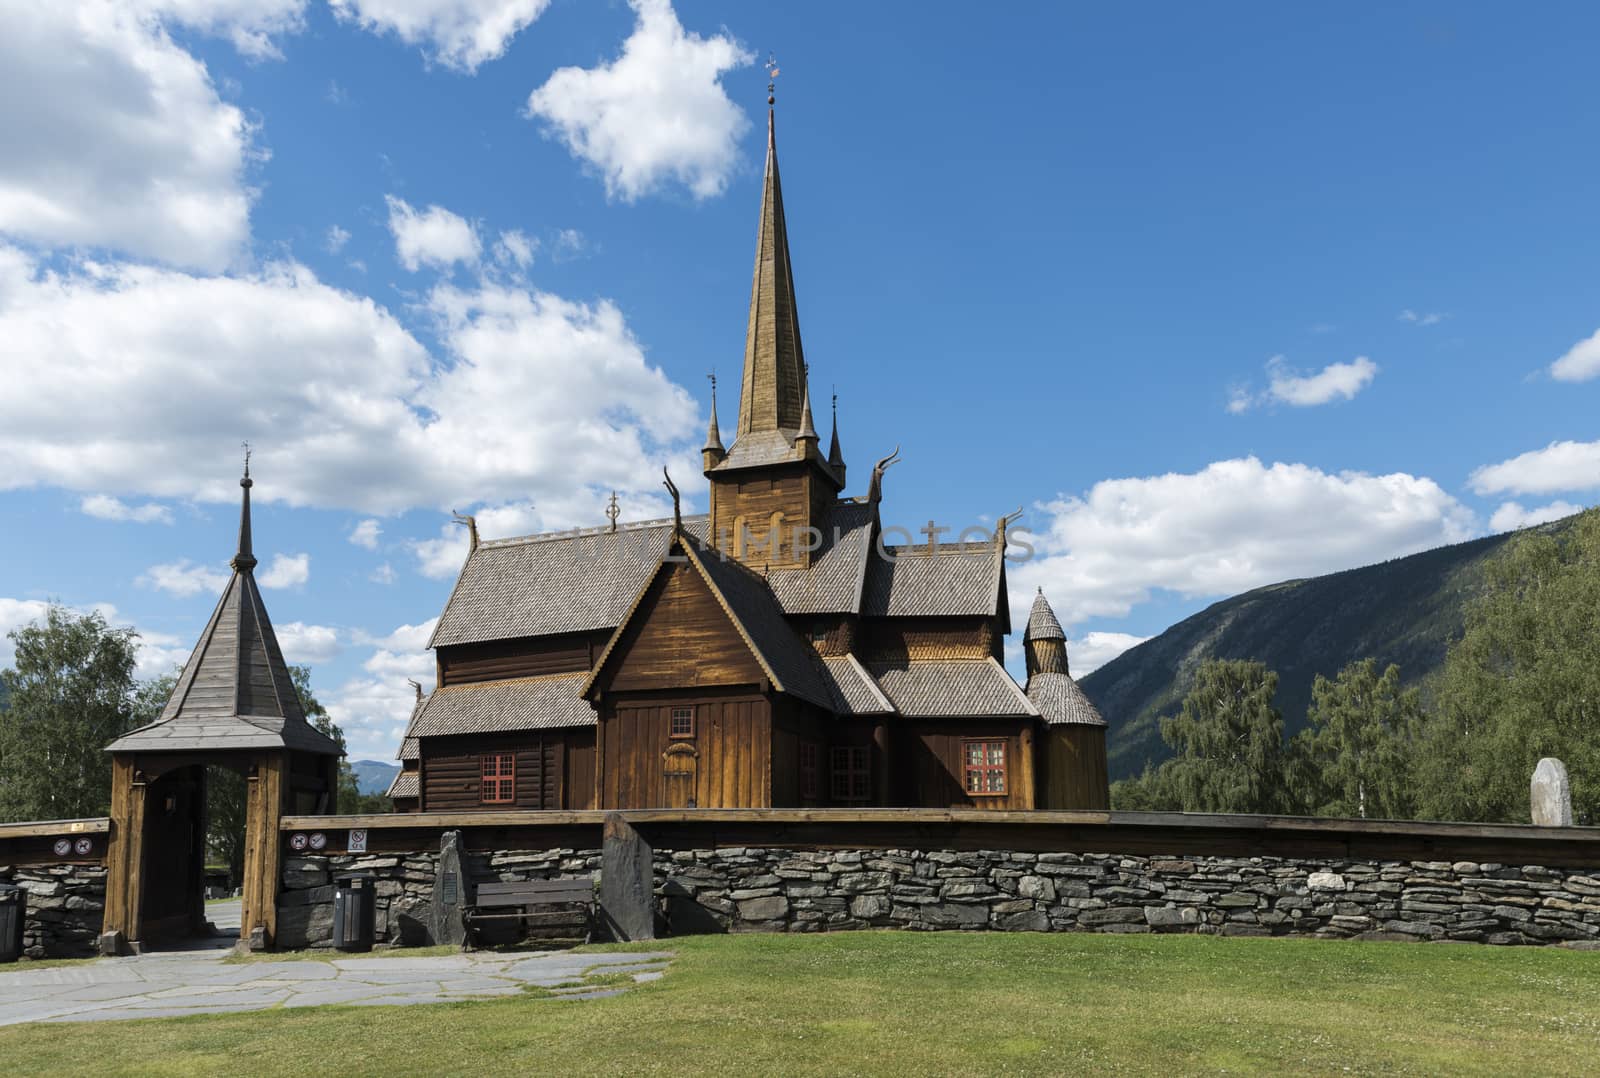 Lom stave church (Lom stavkyrkje) with graveyard foreground, Lom, Norway